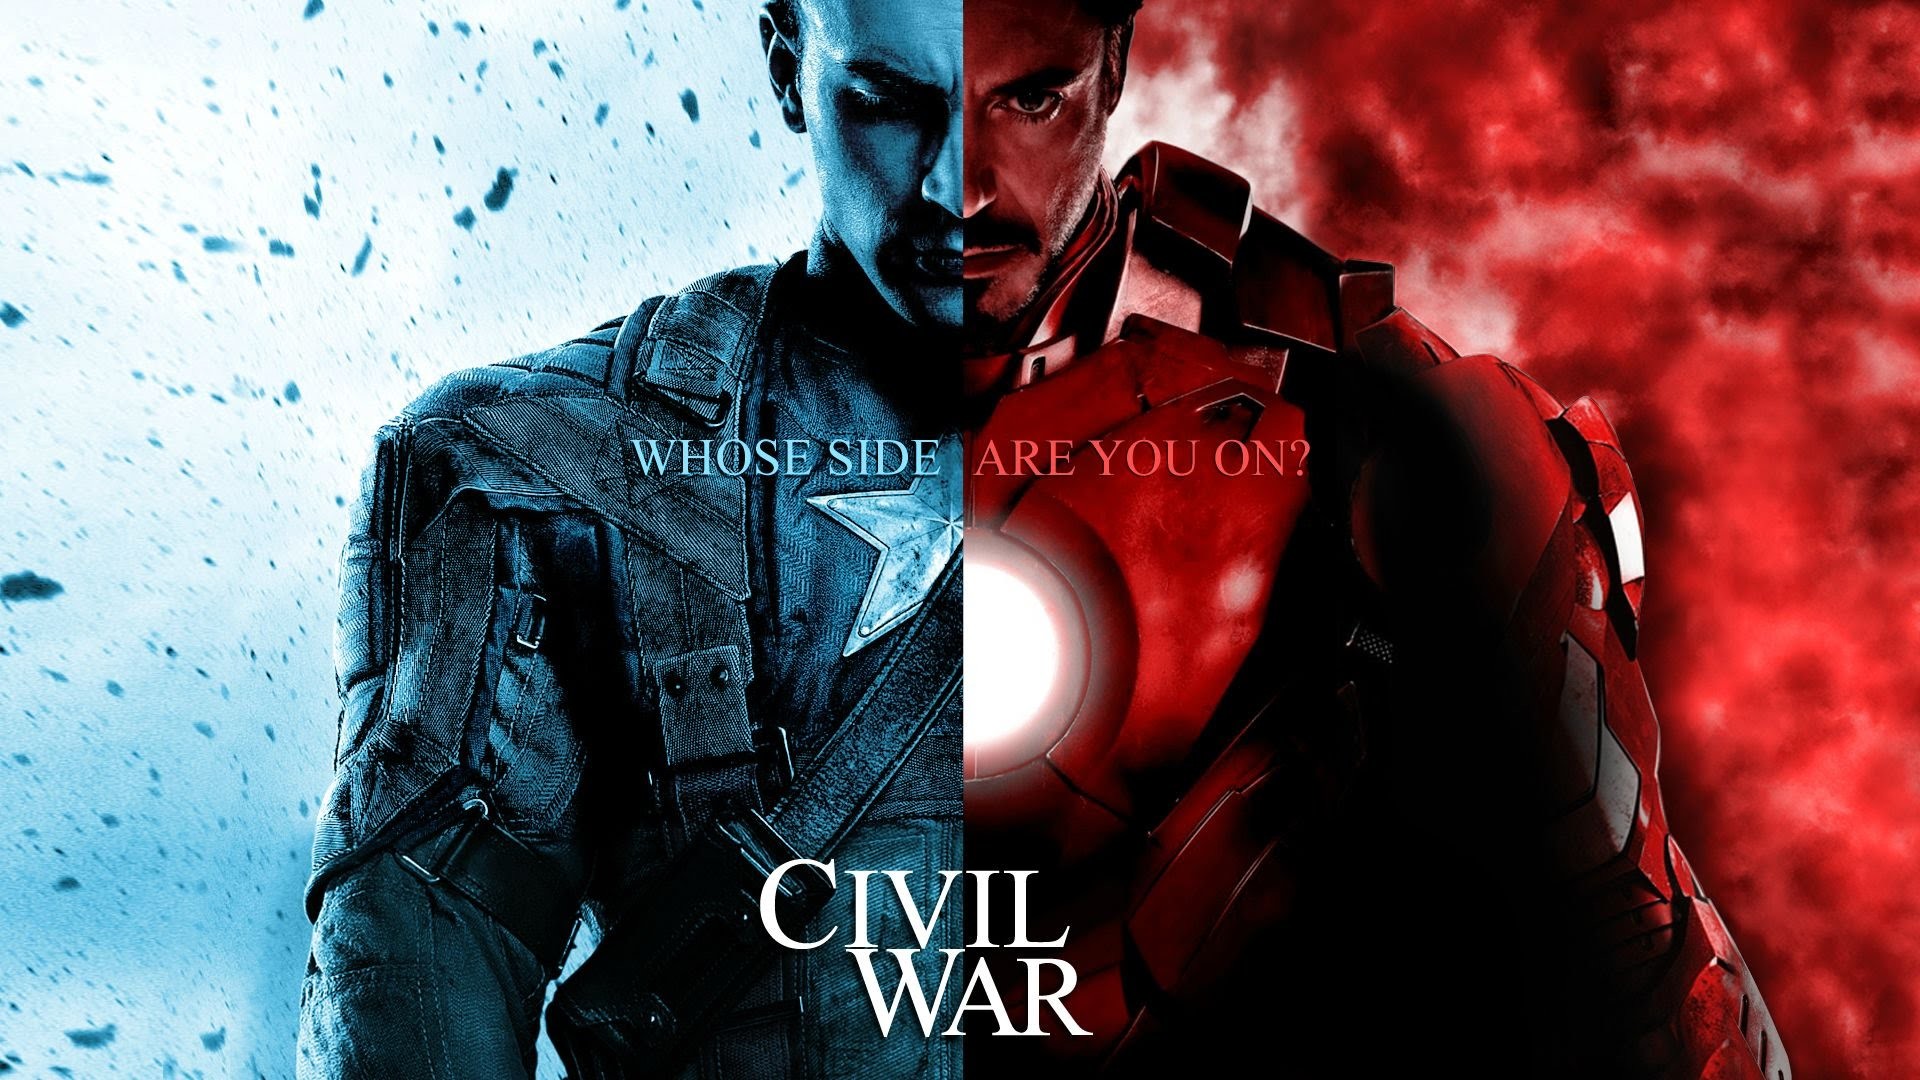 1920x1080 Leaked Captain America: Civil War Photos?!?!?- Last Weeks Superhero News  Tonight! - YouTube